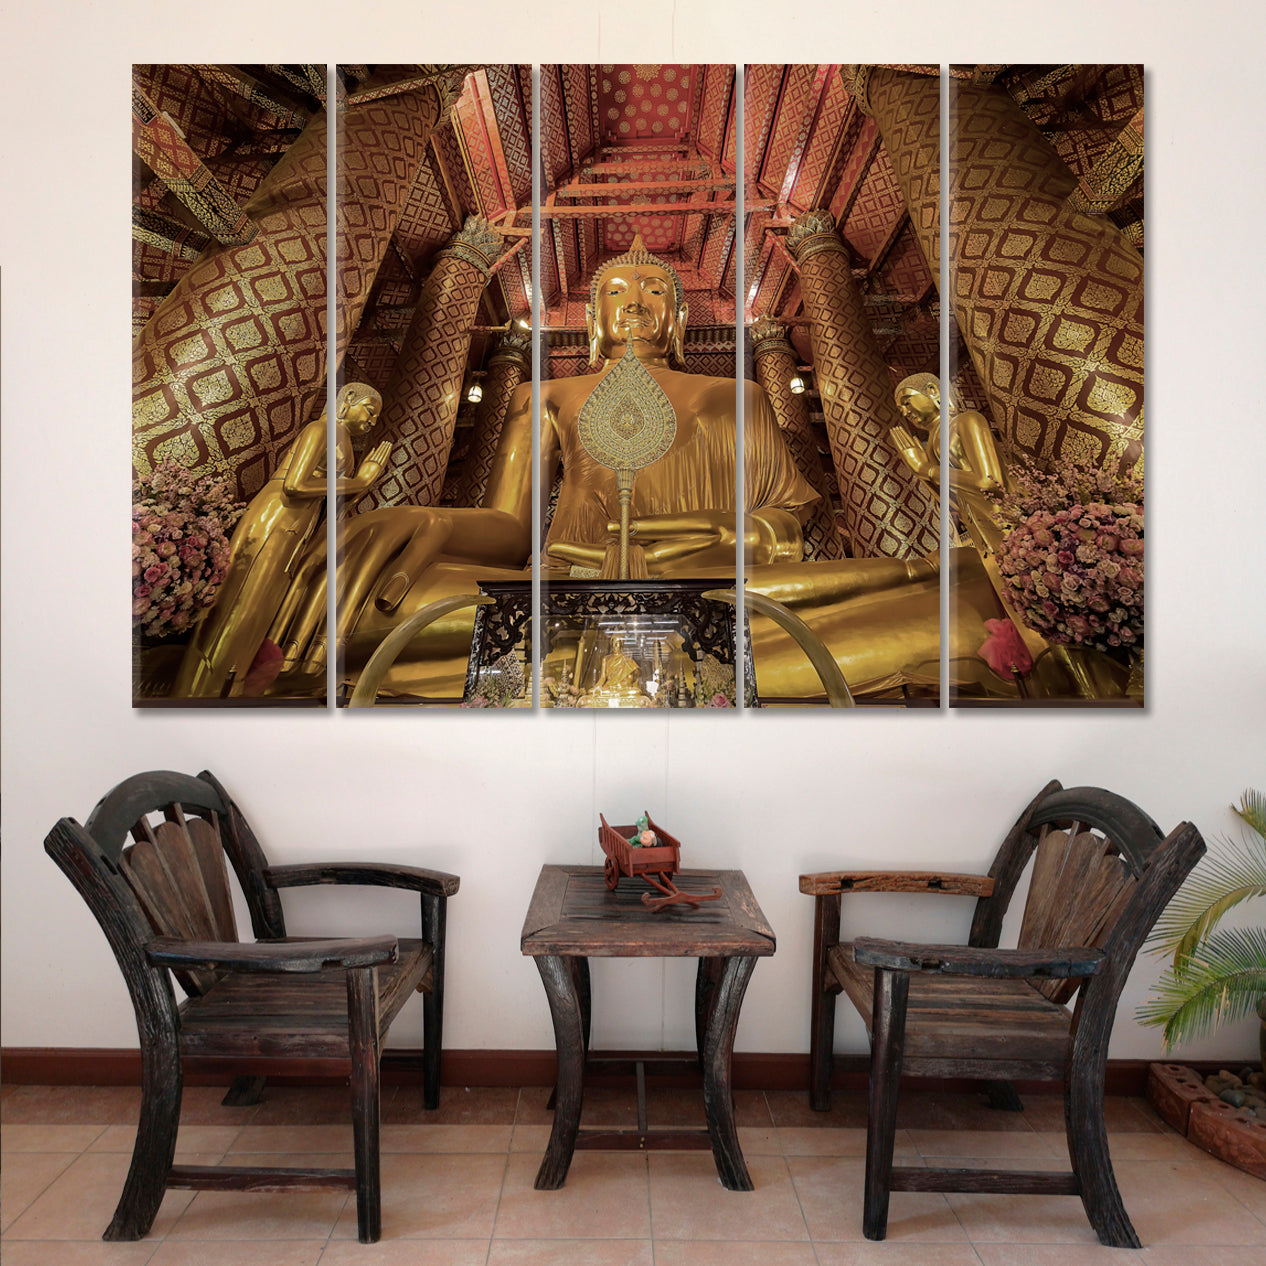 Giant Golden Buddha Thailand Religious Modern Art Artesty 5 panels 36" x 24" 